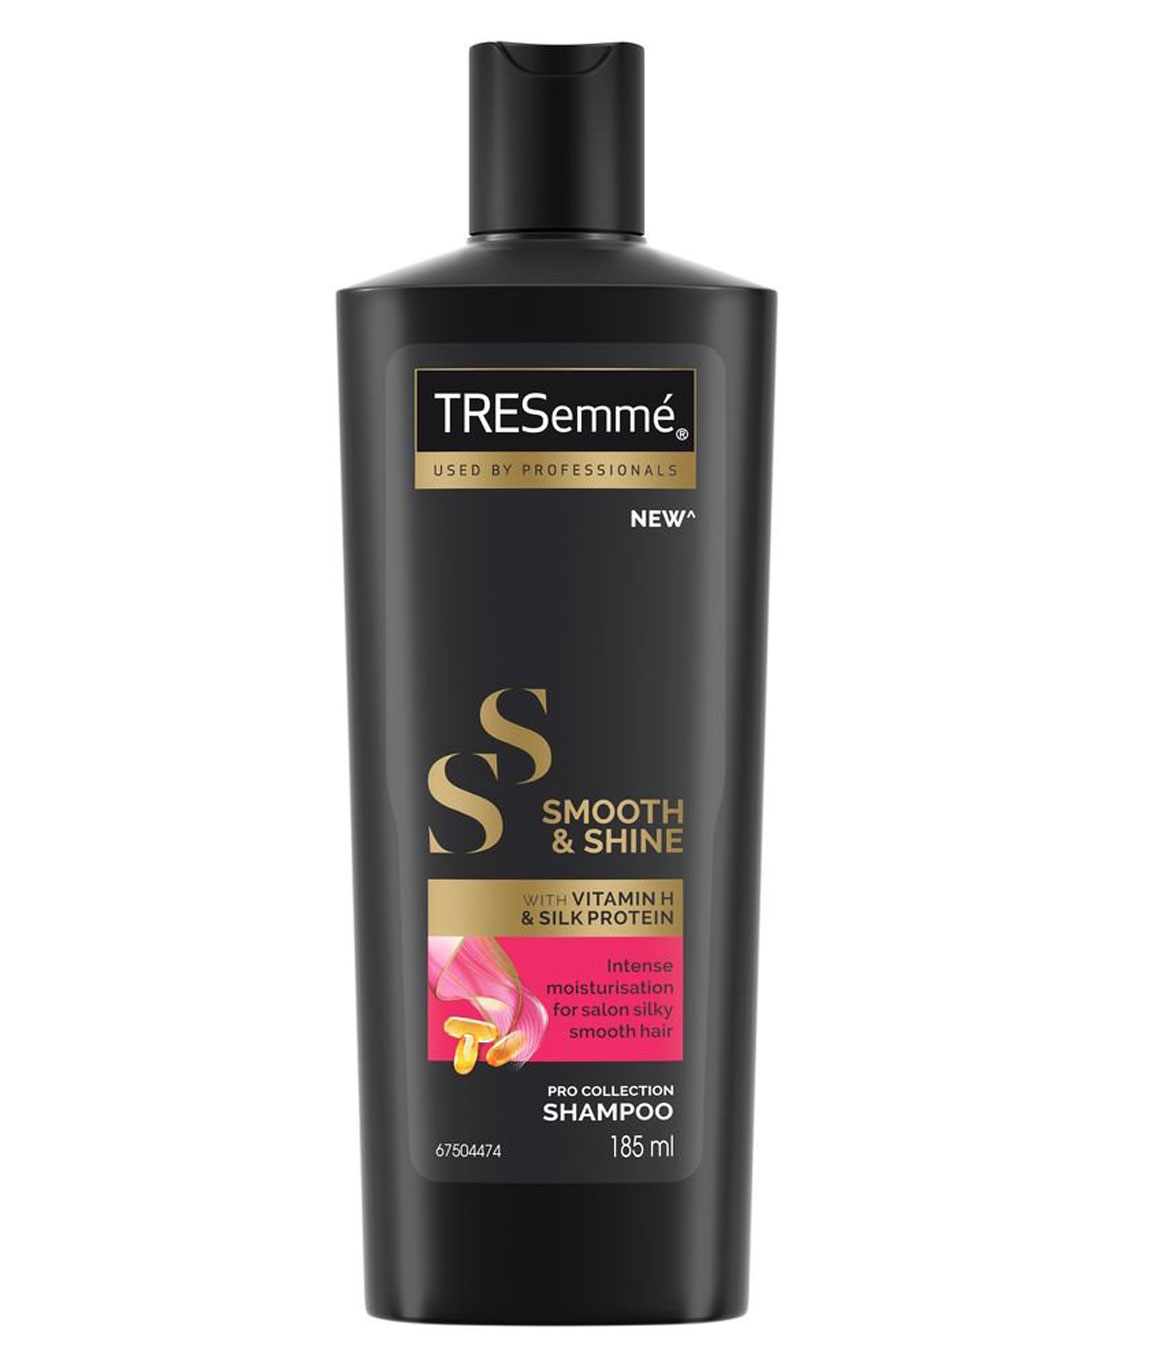 TRESemme Smooth and Shine Shampoo, 185ml